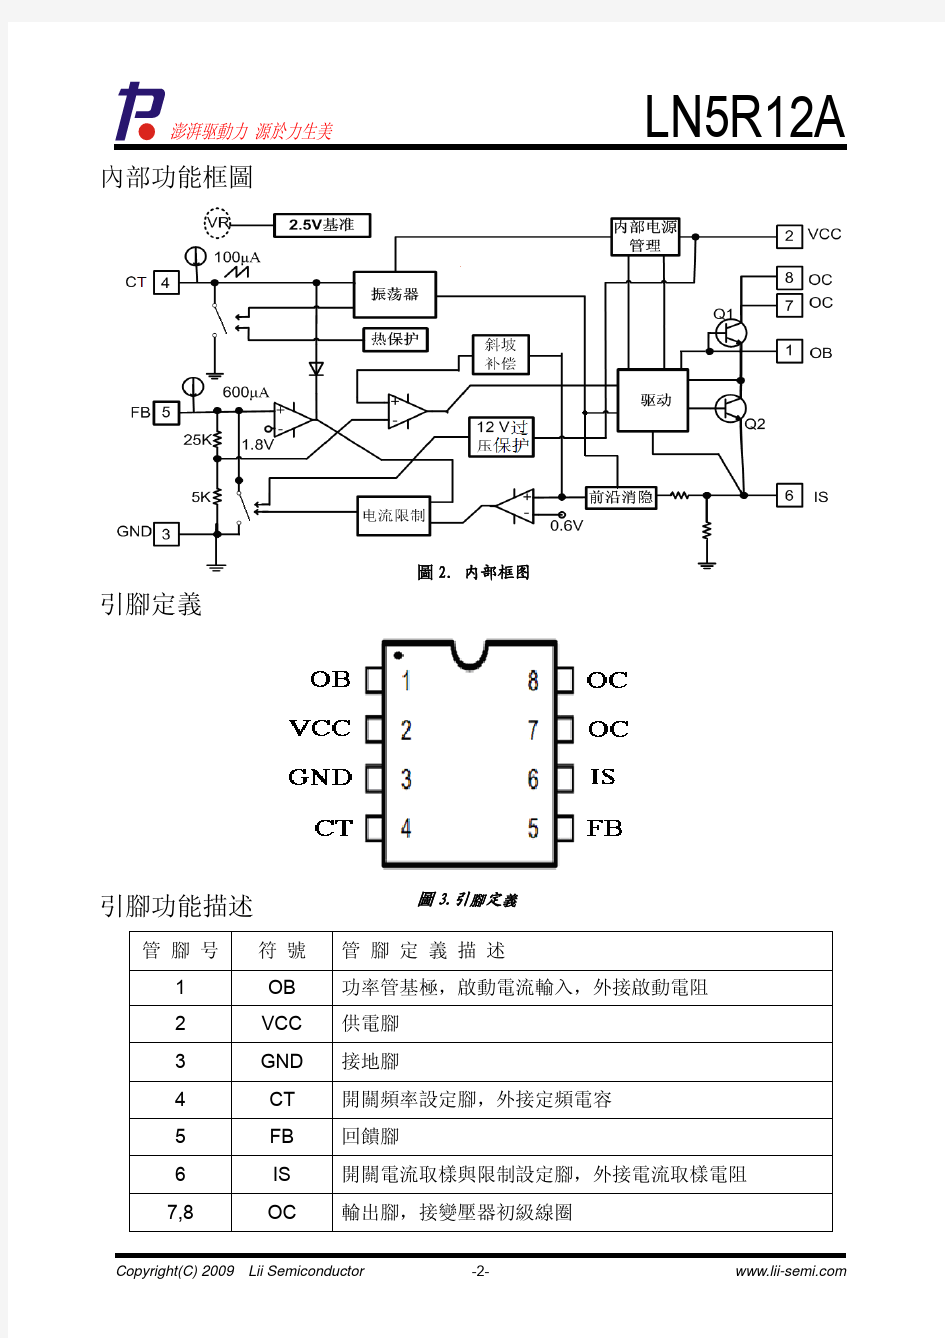 LN5R12A中文版技术指导说明书